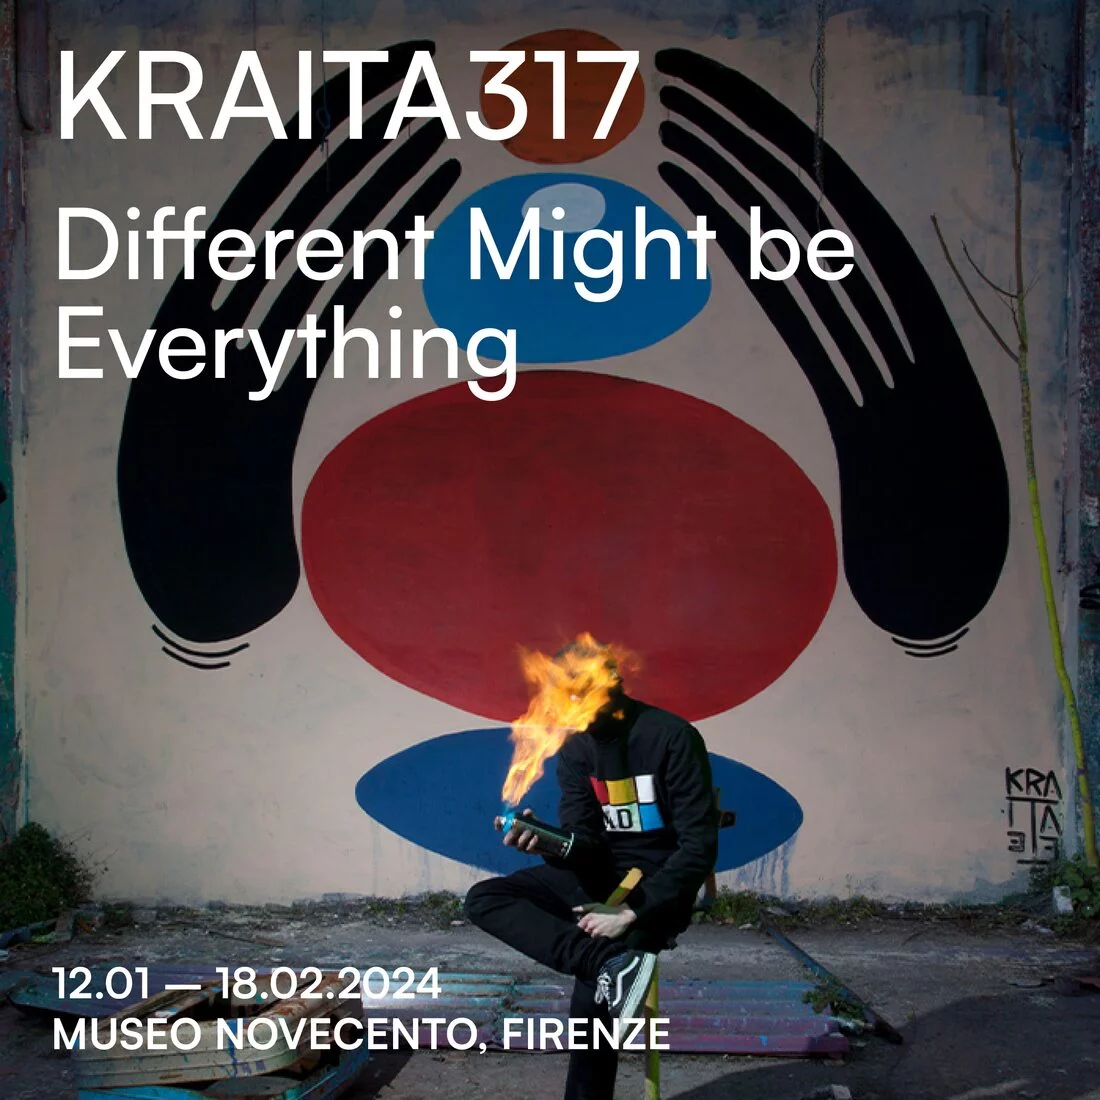 Kraita317. Different Might be Everything